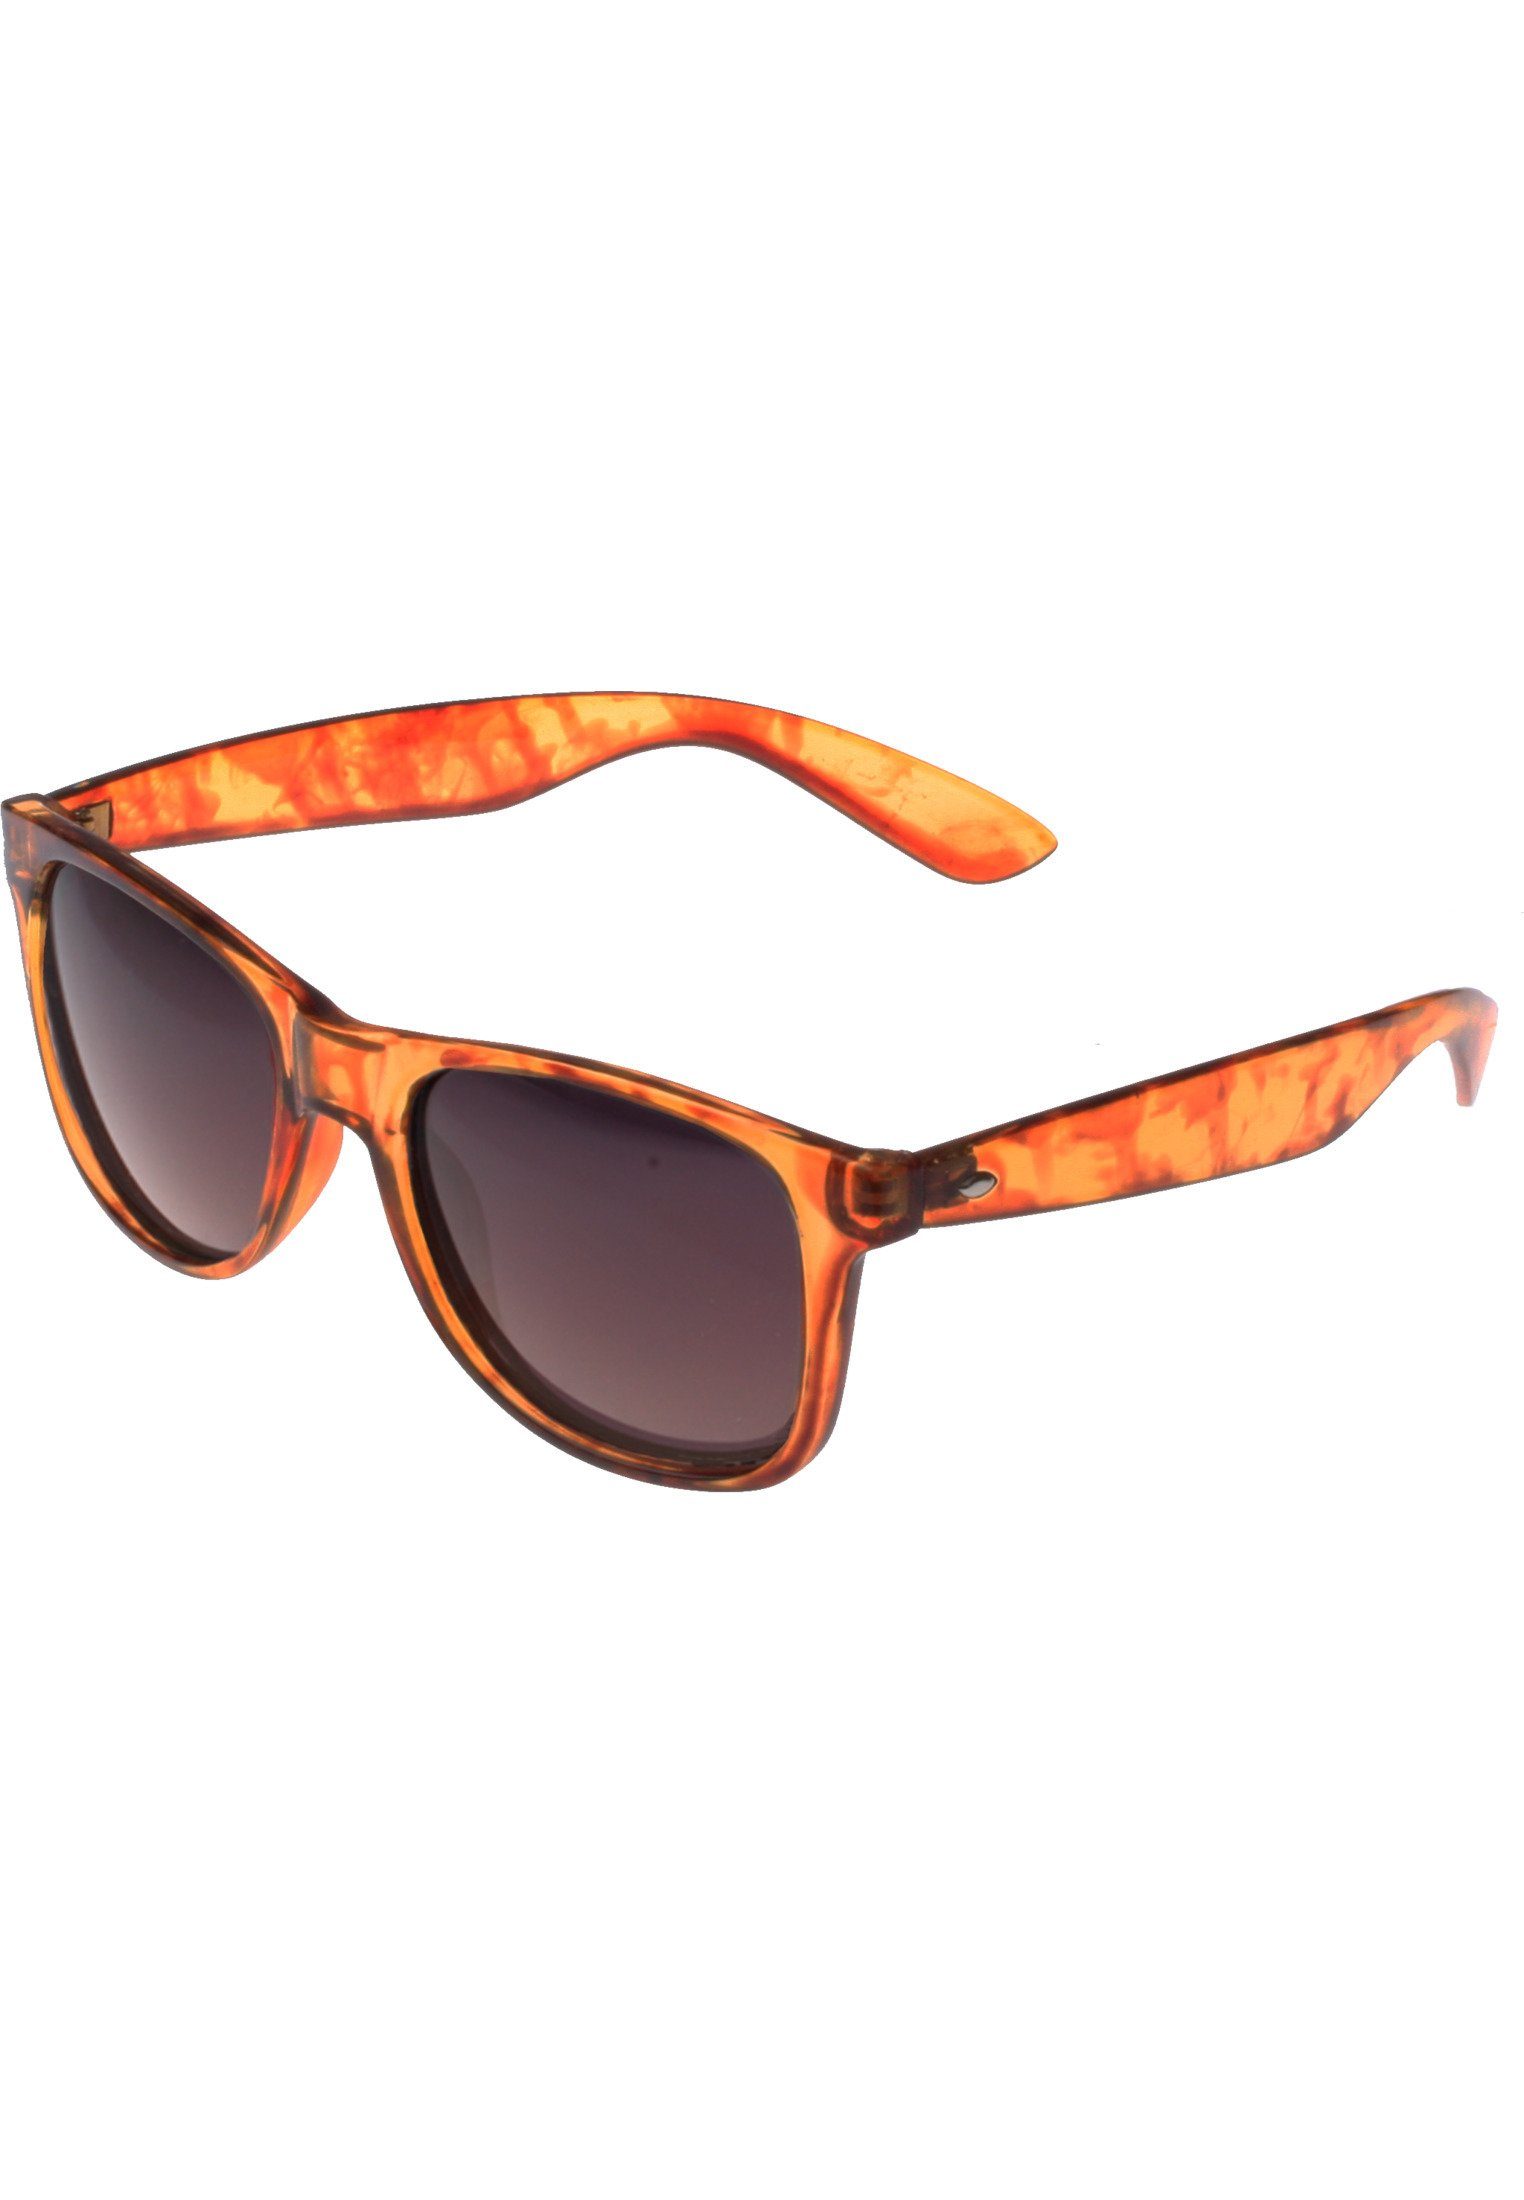 MSTRDS Sonnenbrille Accessoires Groove Shades GStwo amber | Sonnenbrillen